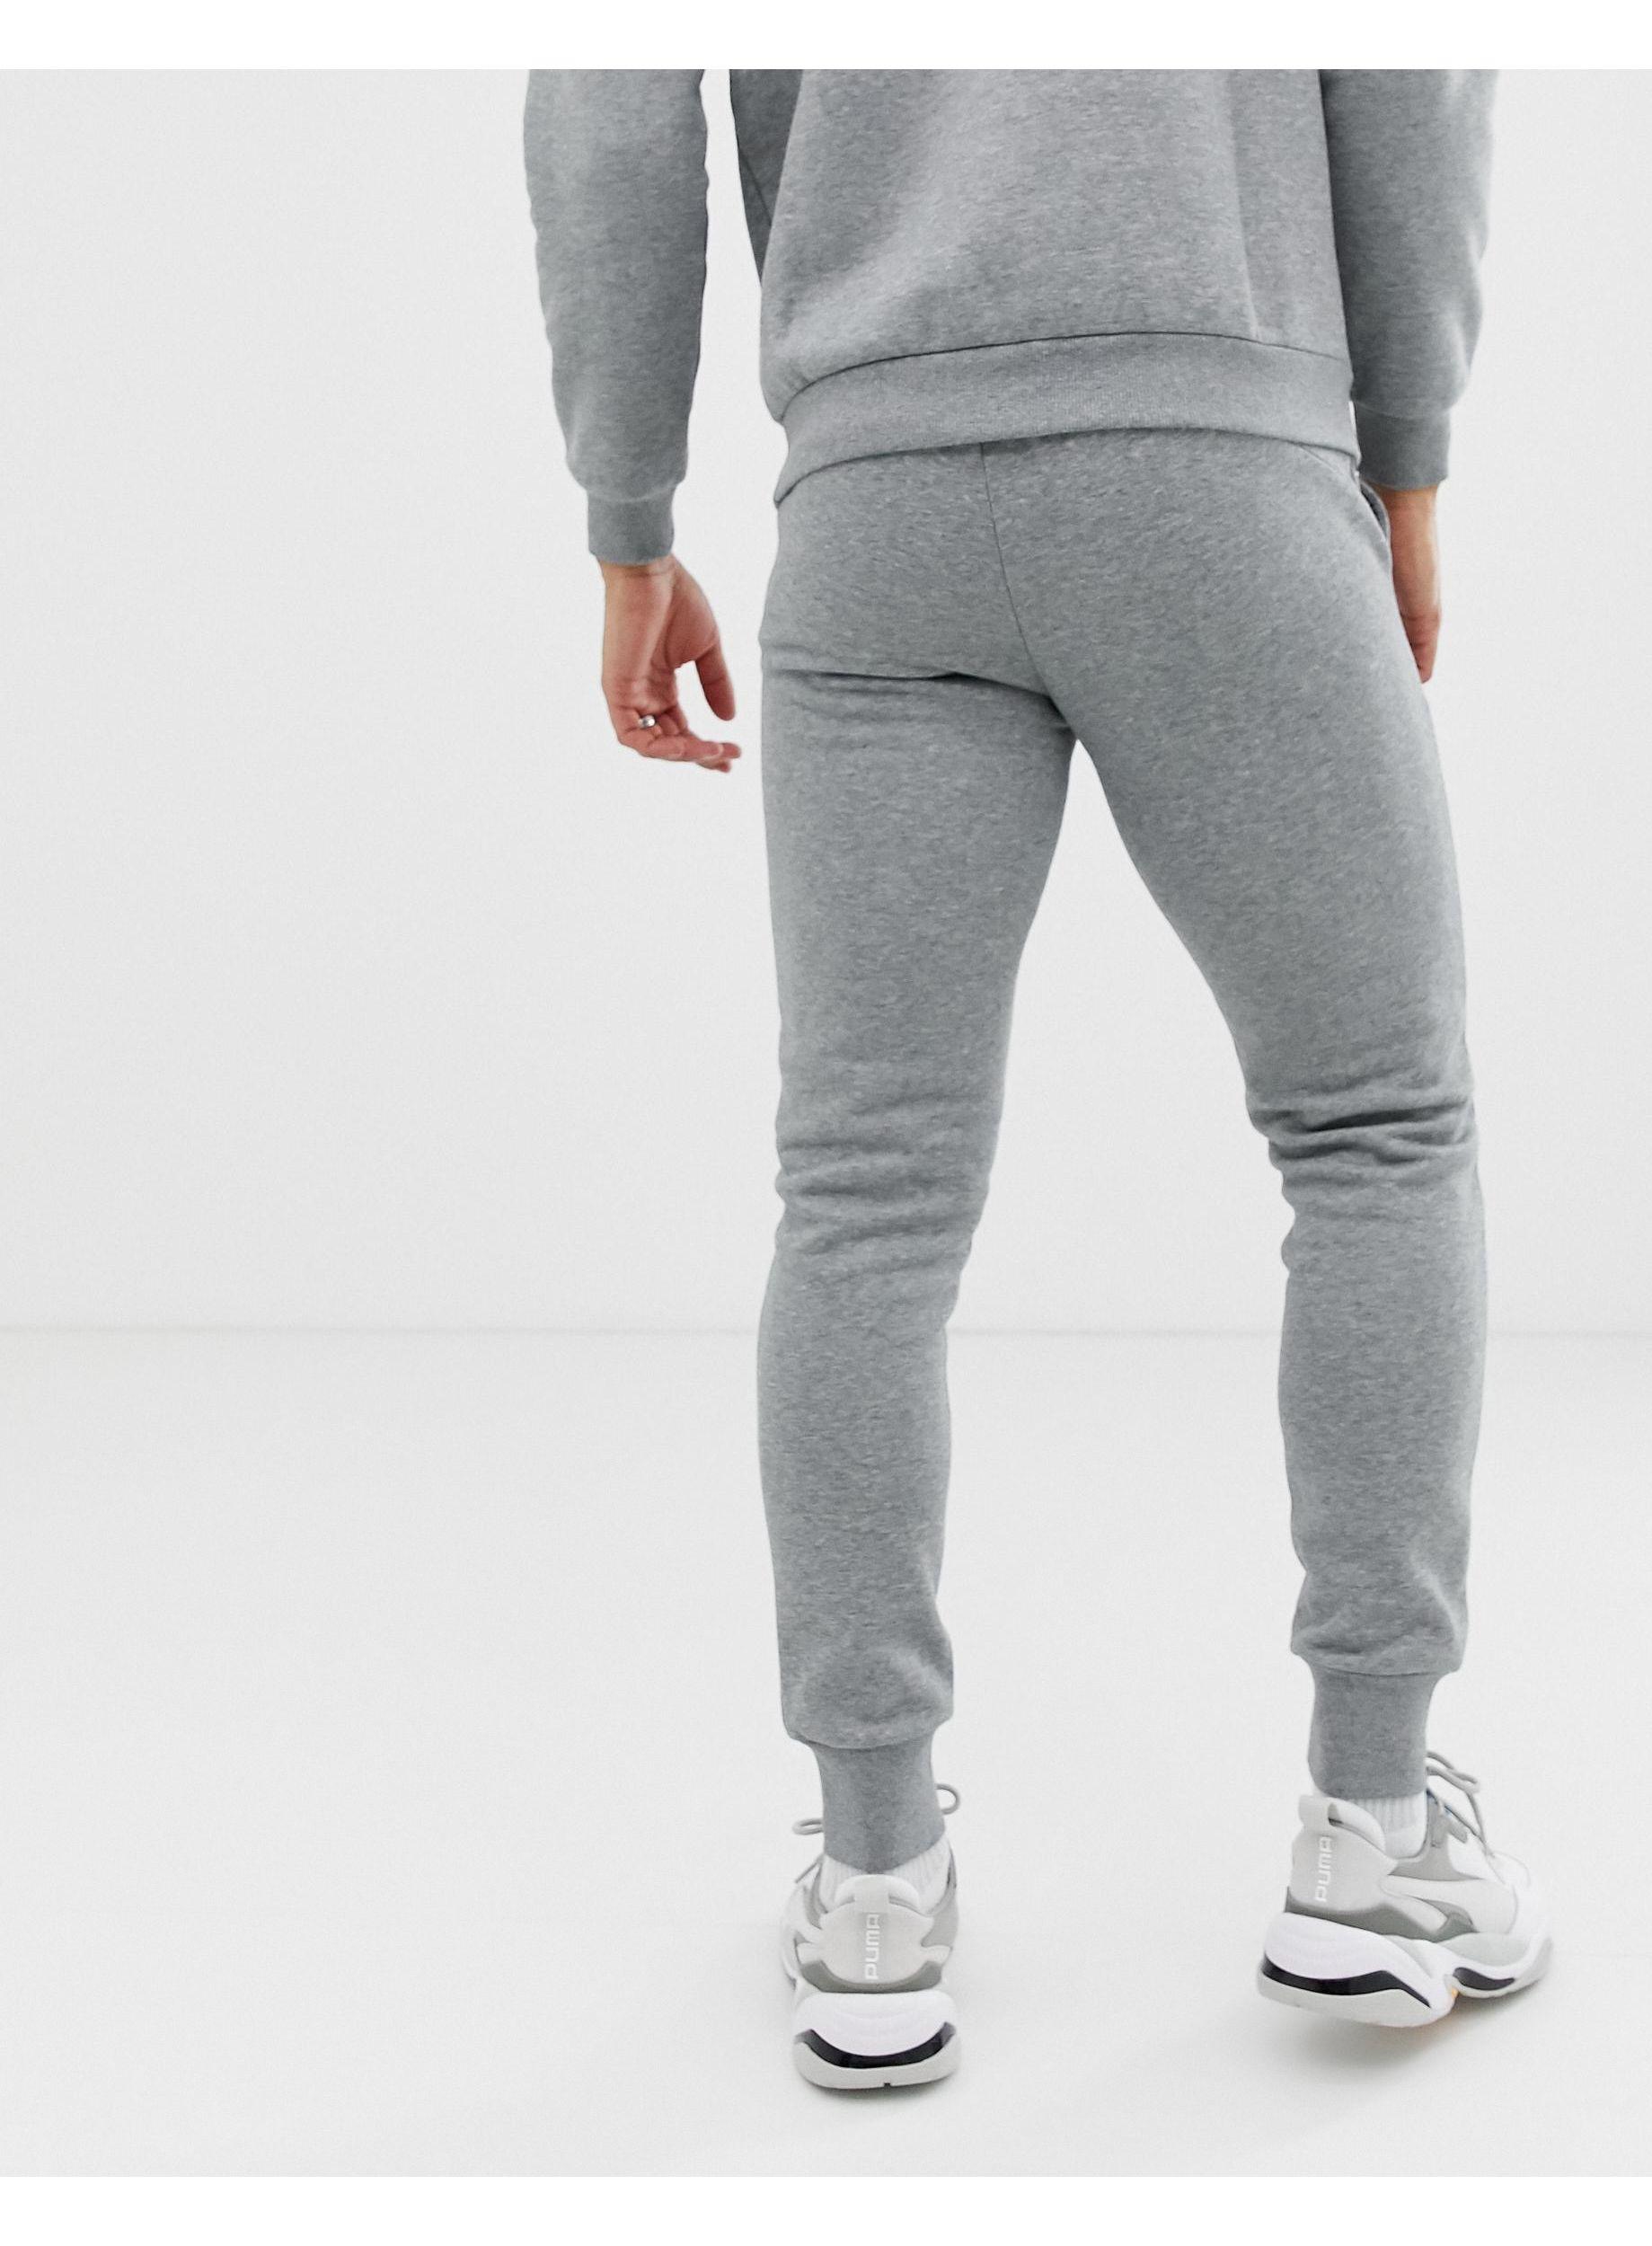 PUMA Essentials Skinny Fit Sweatpants in Gray for Men